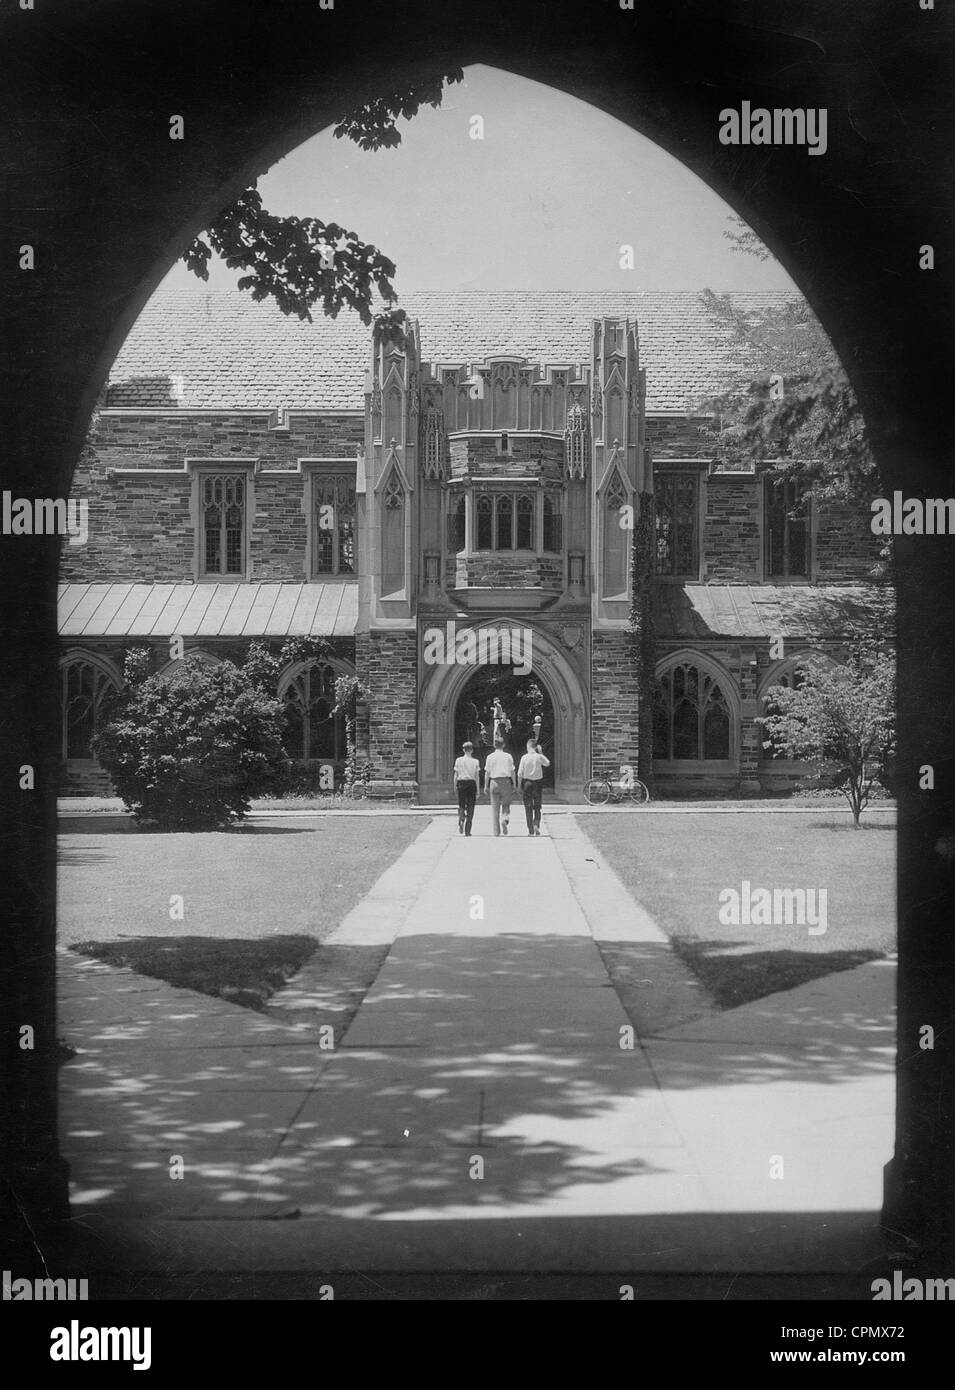 princeton-university-1931-stock-photo-alamy